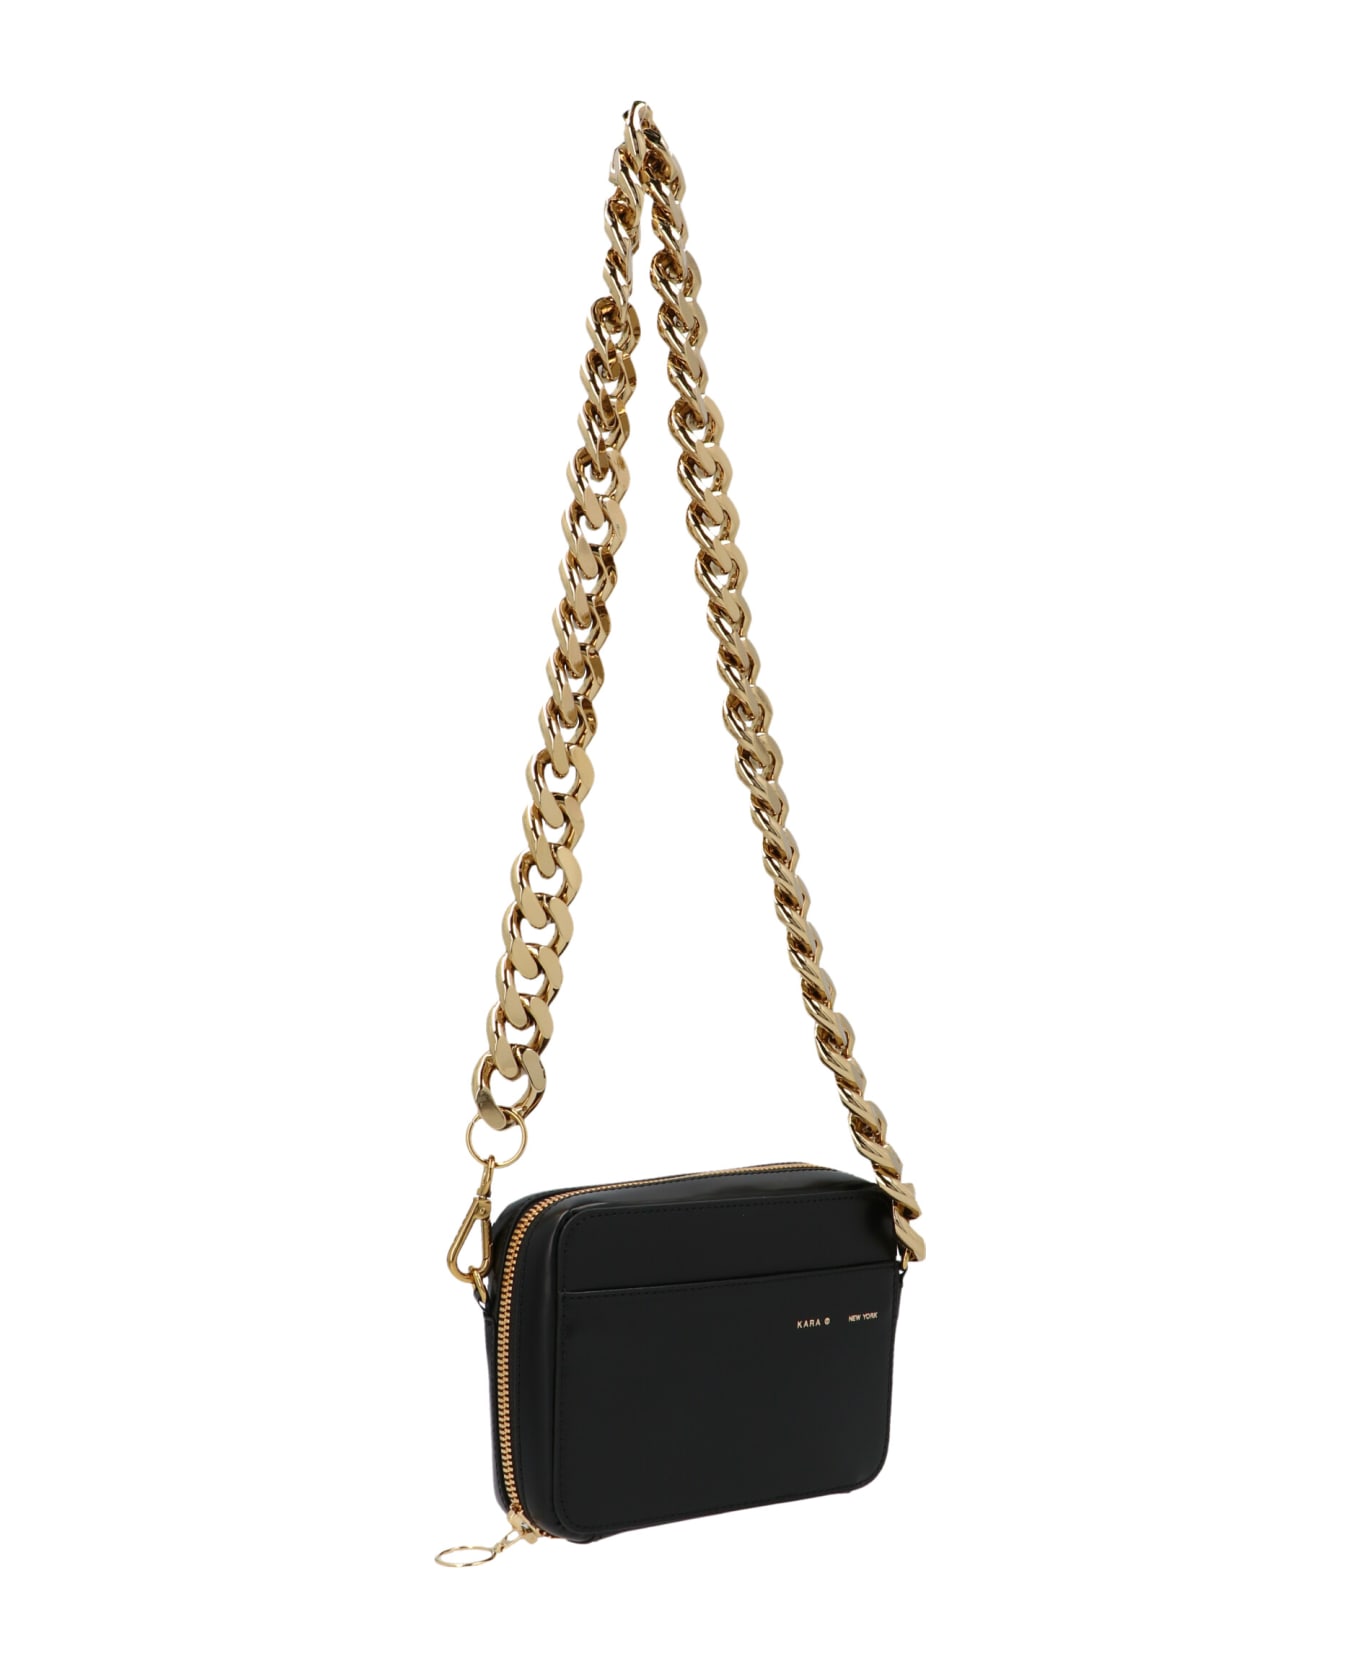 Kara 'chain' Bag - Black Gold ショルダーバッグ